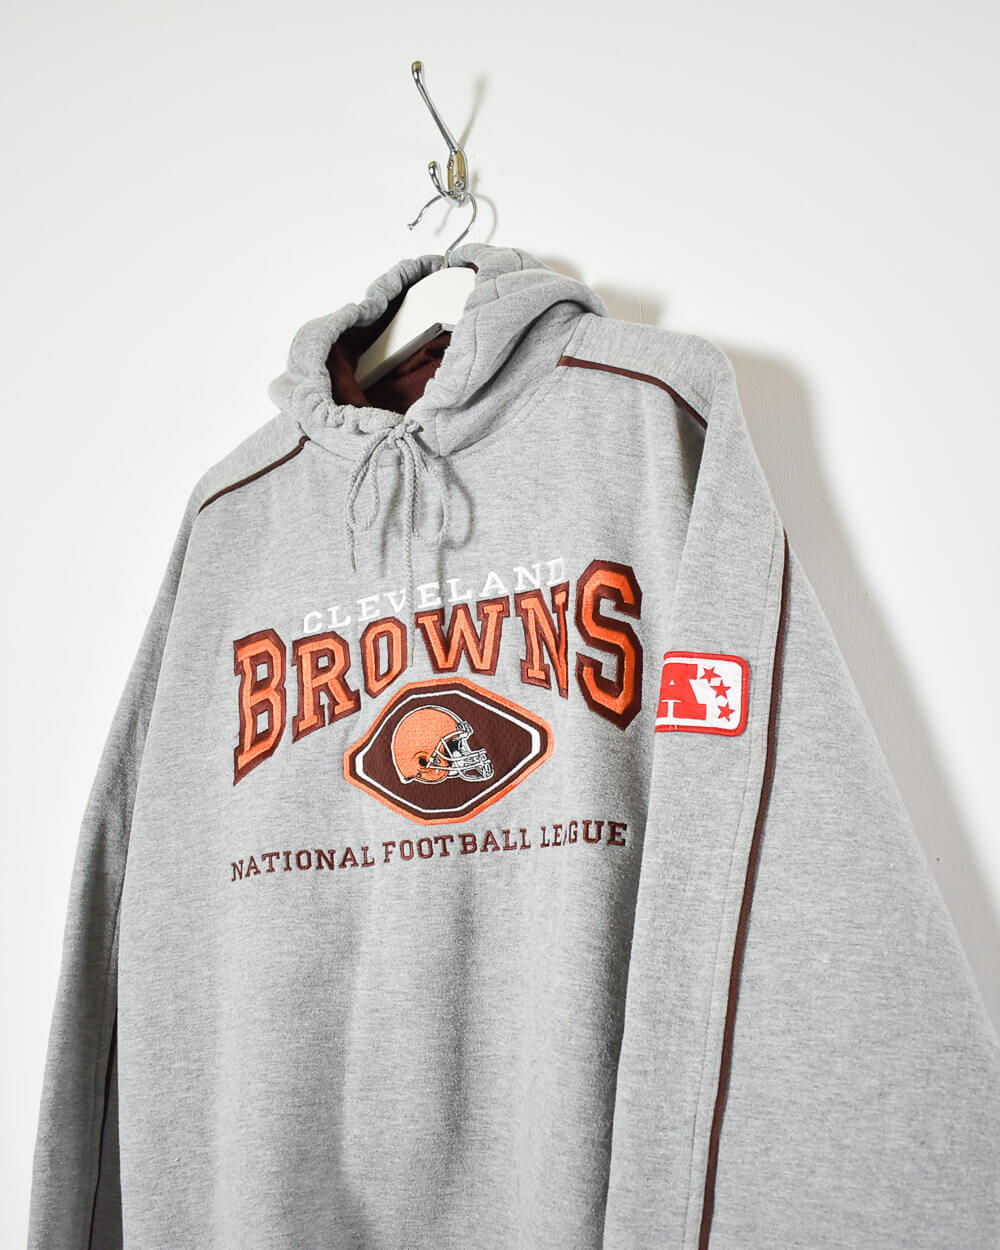 Vintage 90s Cleveland Browns Sweatshirt  Vintage hoodies, Sweatshirts,  Vintage sweatshirt